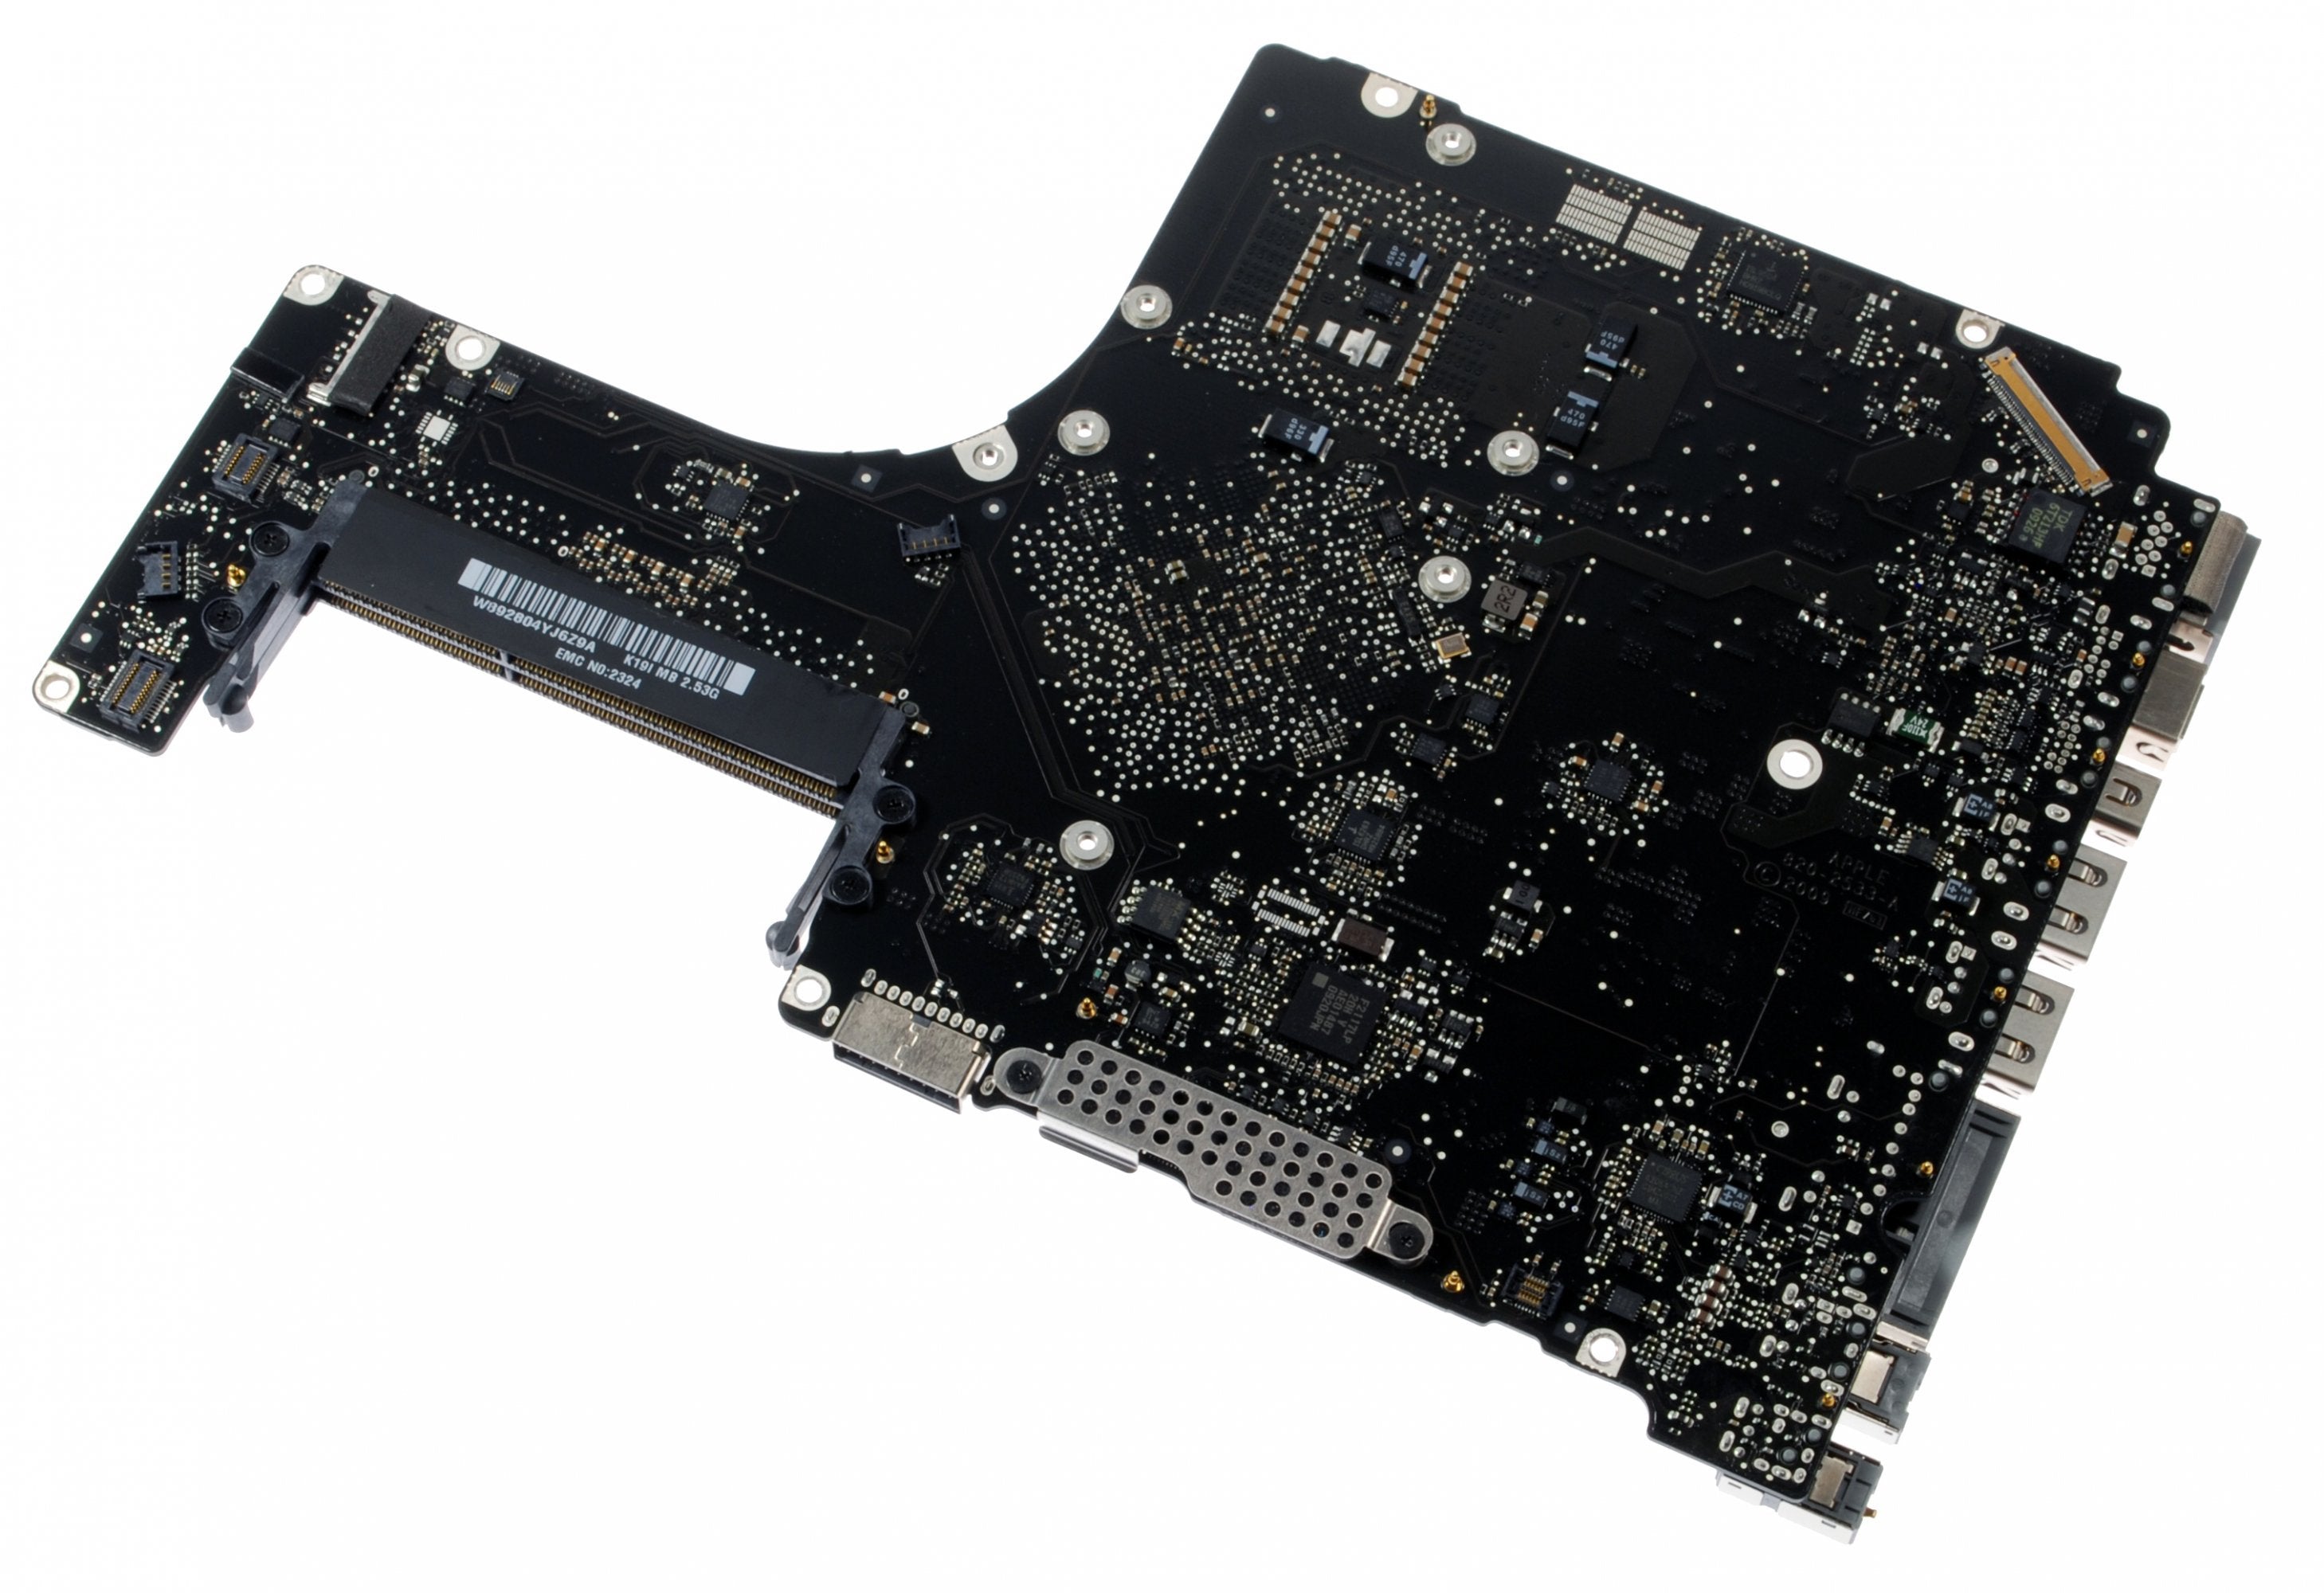 MacBook Pro 15" Unibody (Mid 2009) 2.53 GHz Logic Board